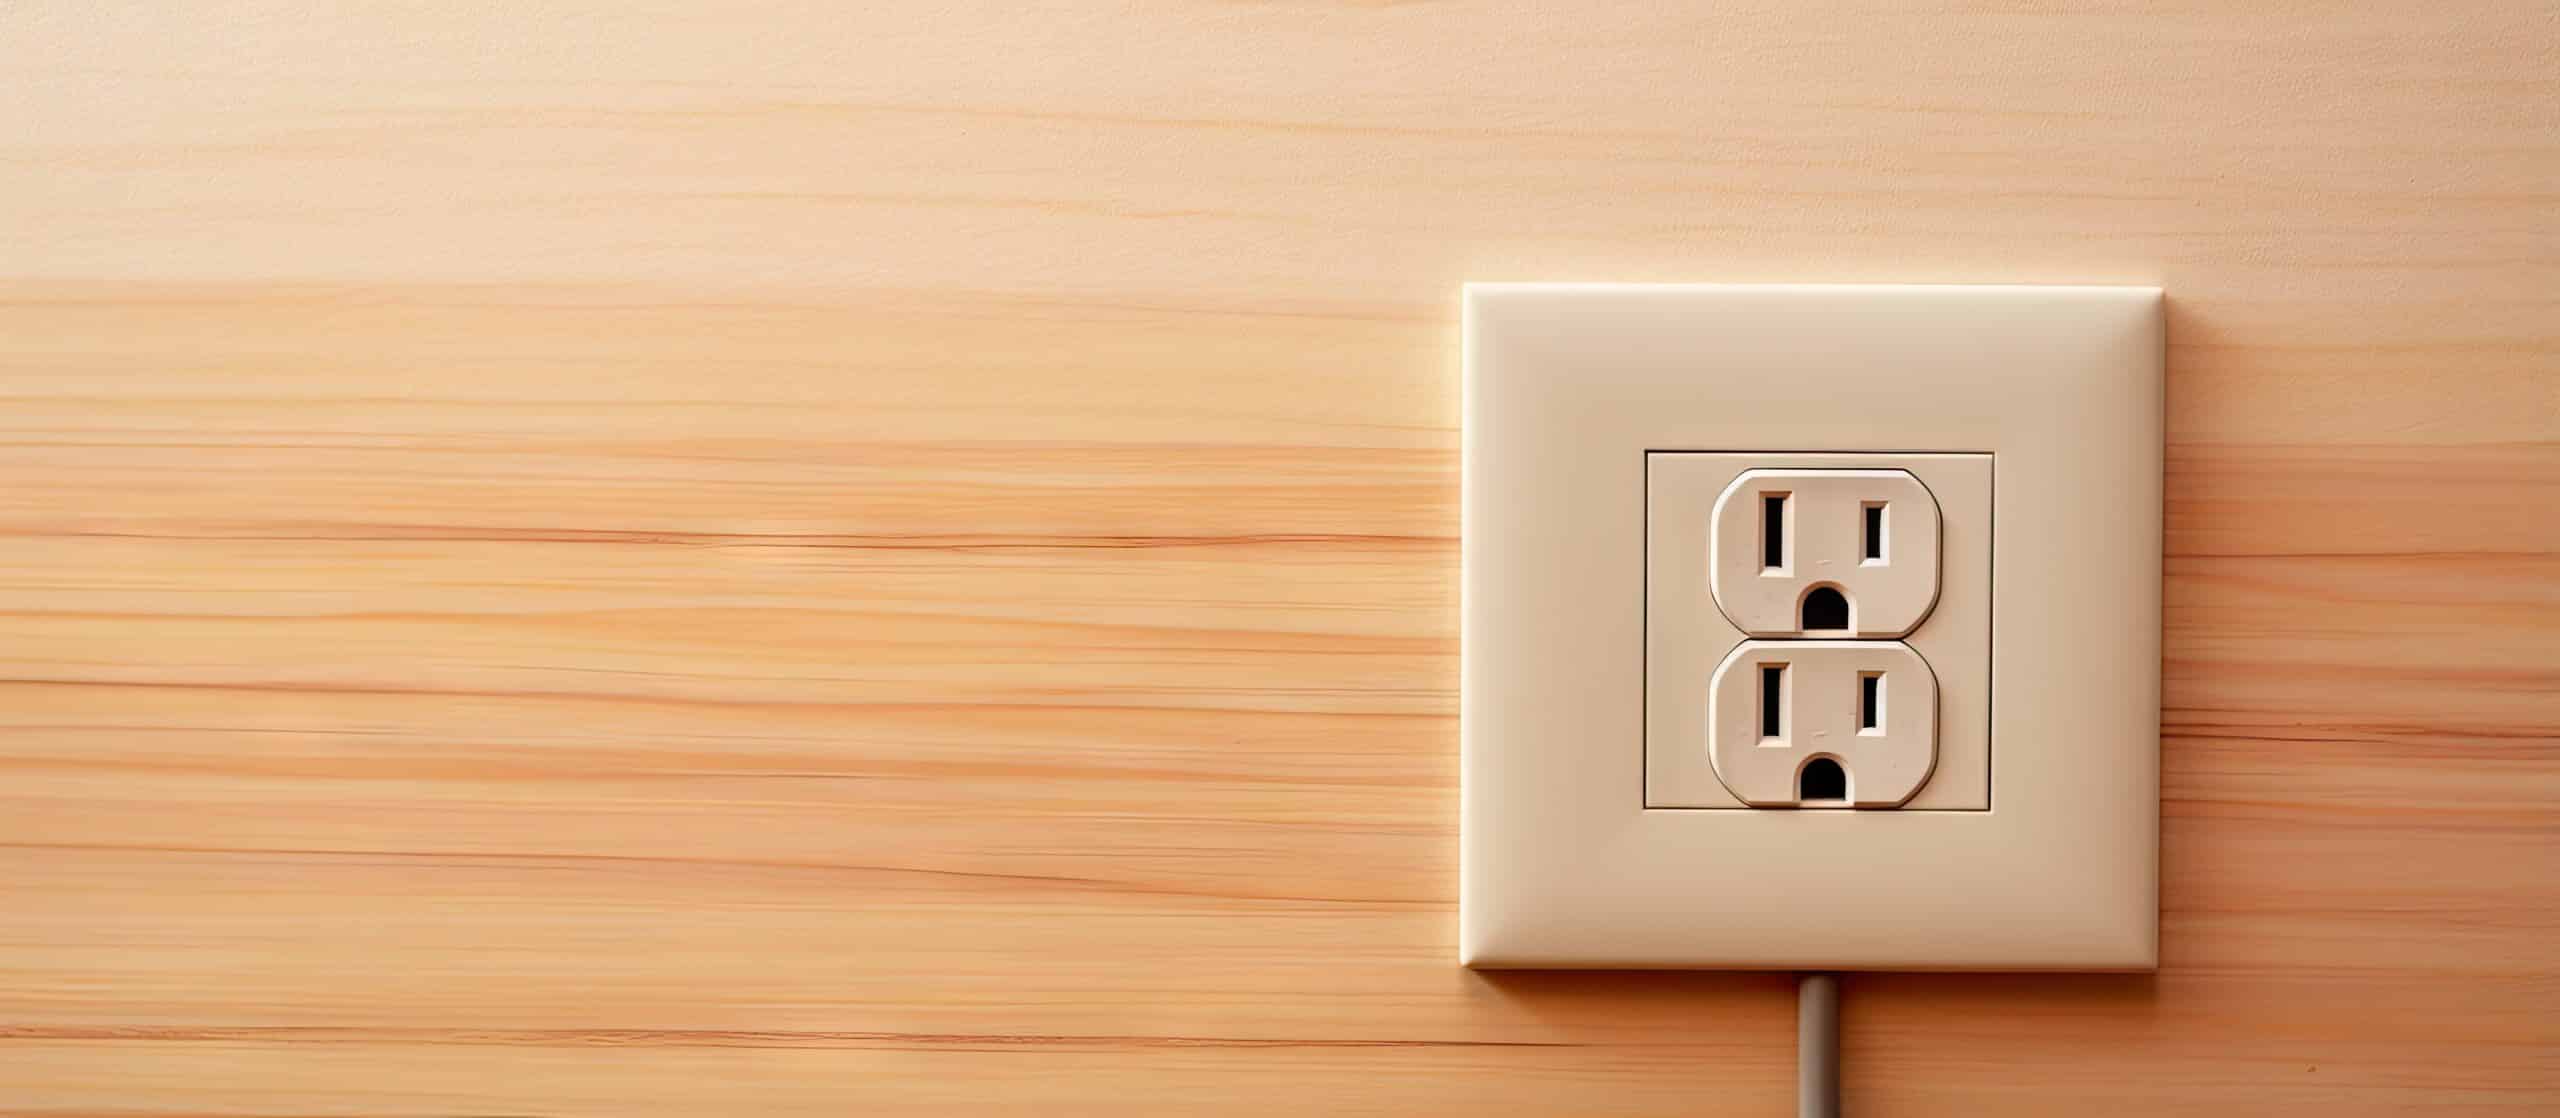 www.appr.com : How To Setup Amazon Smart Plug?